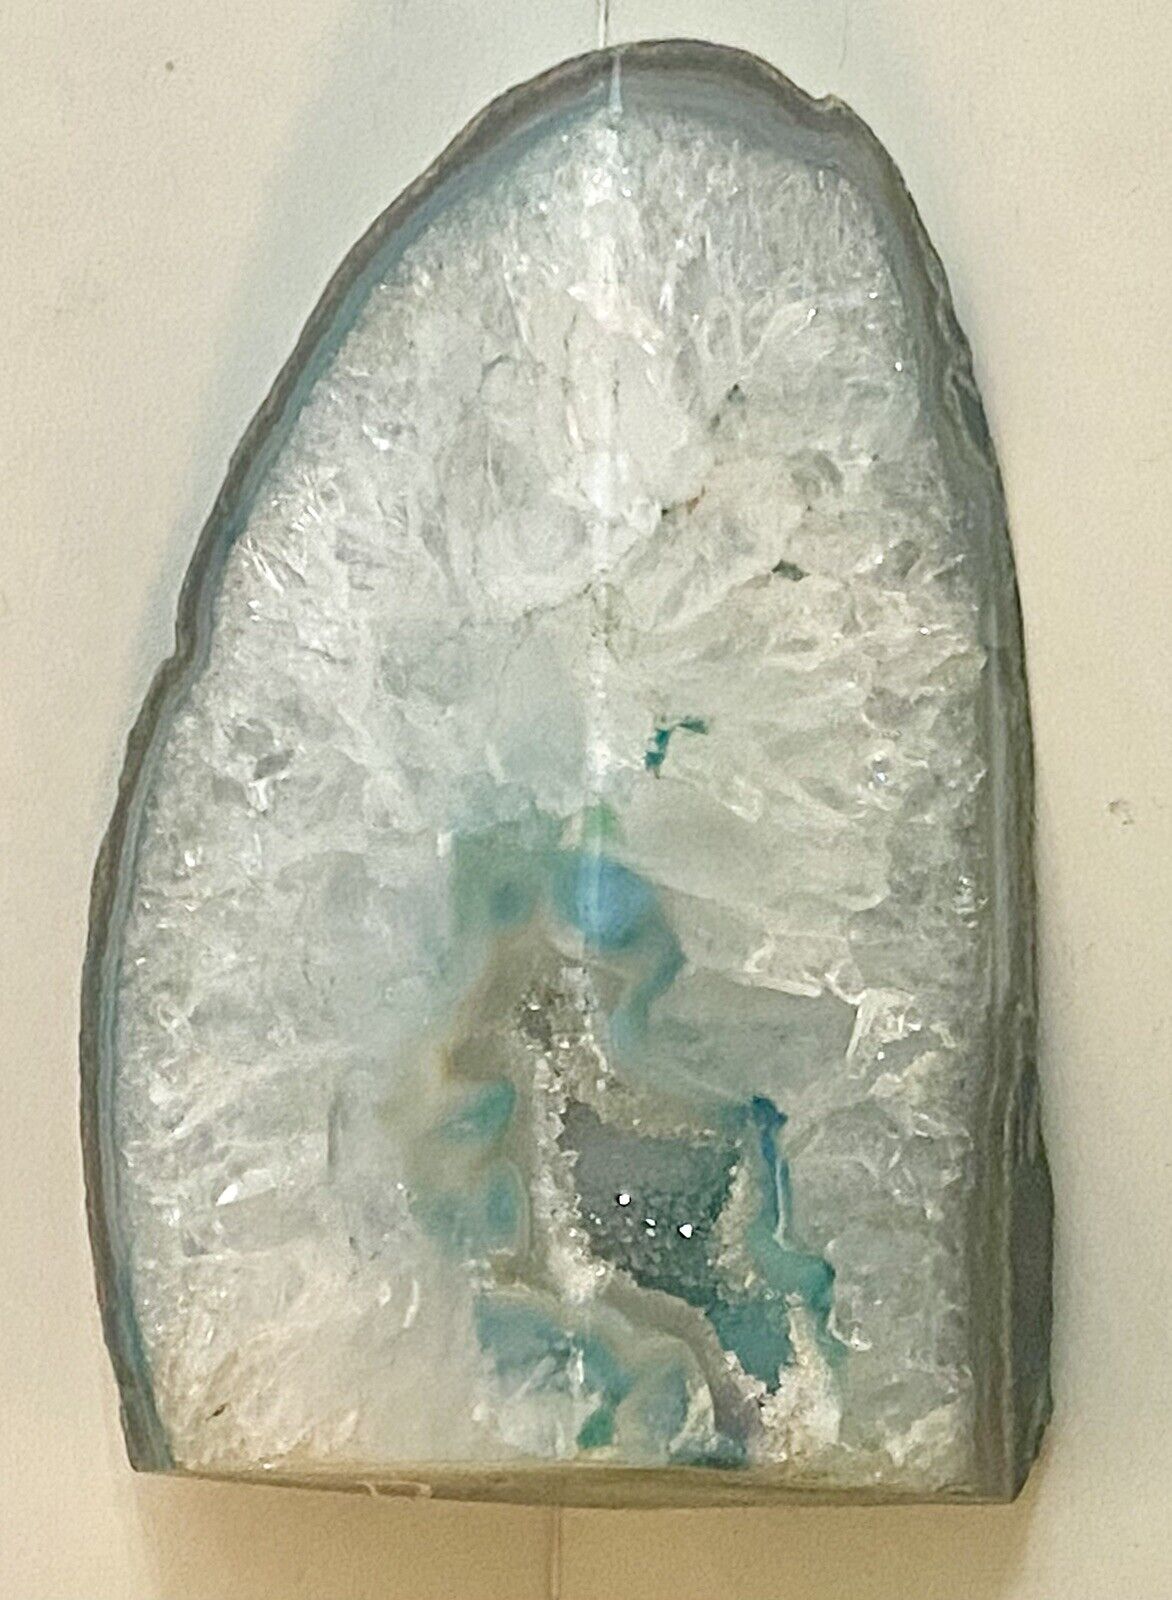 Blue Crystal Agate Geode Beautiful Polished Brazilian Stone - 2 Pounds 7 Ounces